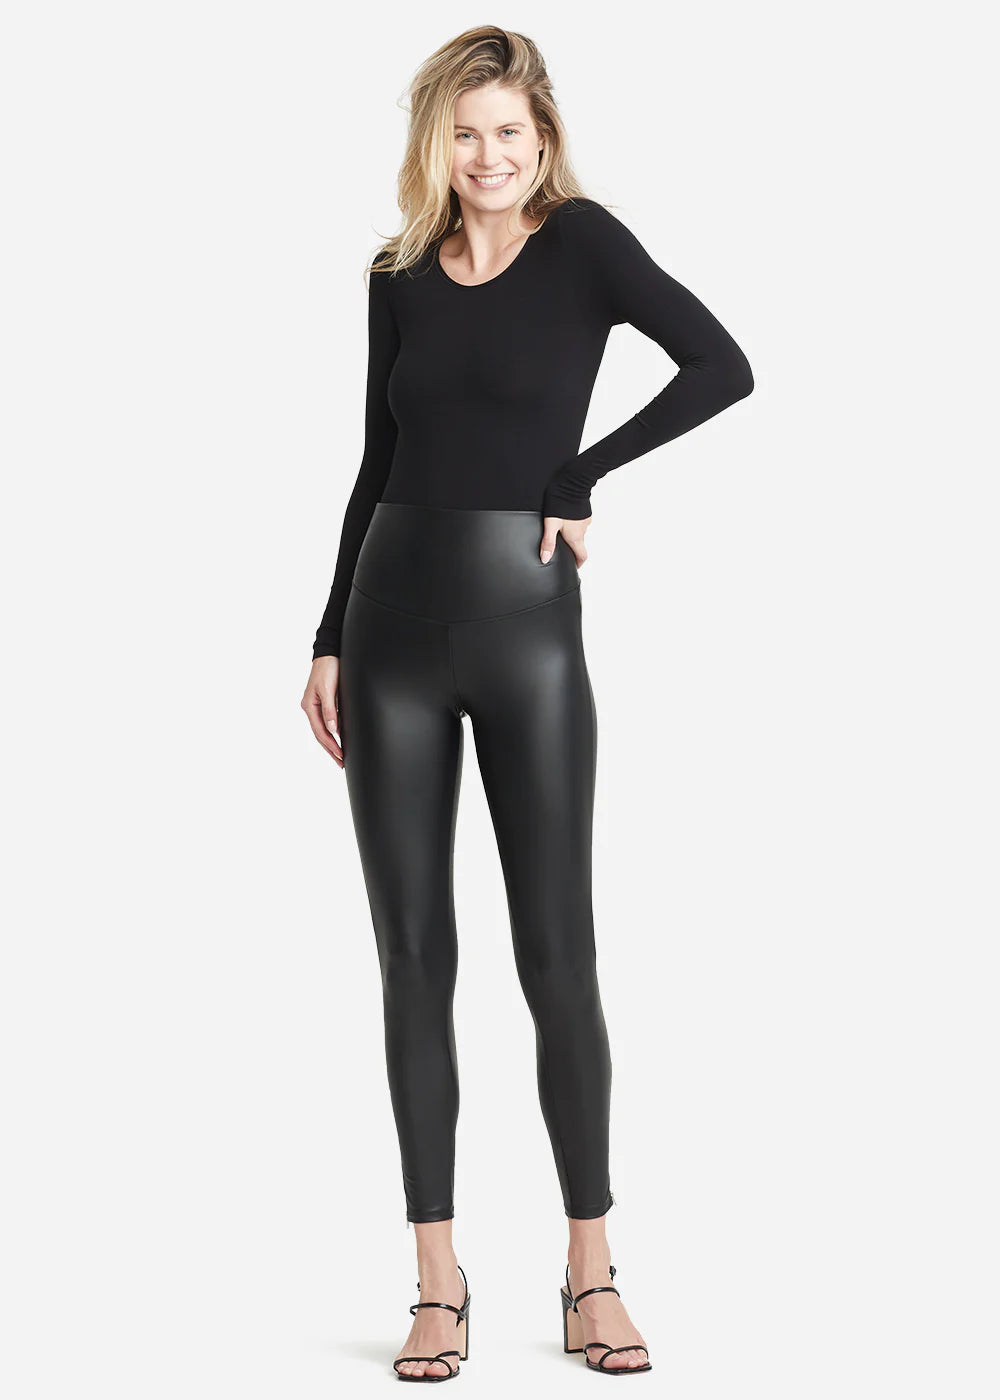 SALE Long Sleeve Shaping Thong Bodysuit in Black – Island Girl